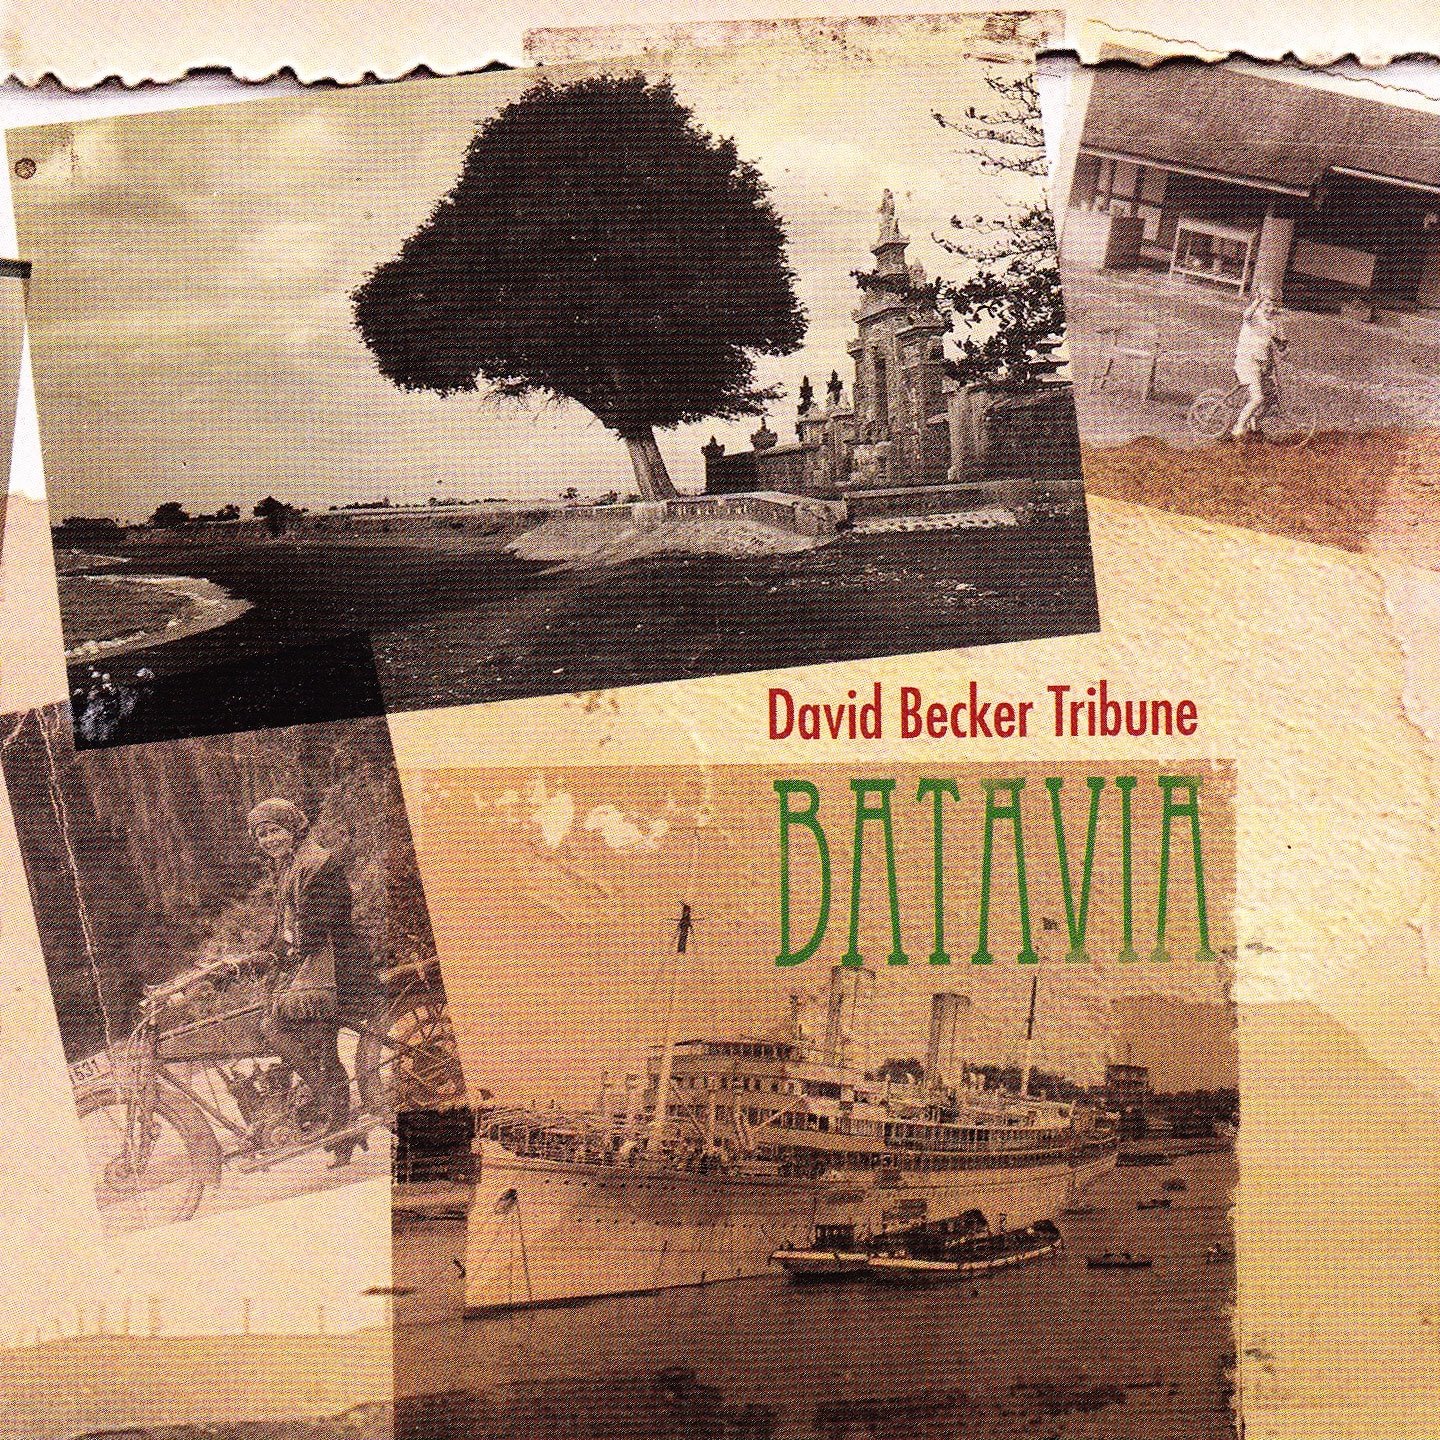 David Becker Tribune-Batavia-(319.1443.2)-CD-FLAC-2010-TDM Download